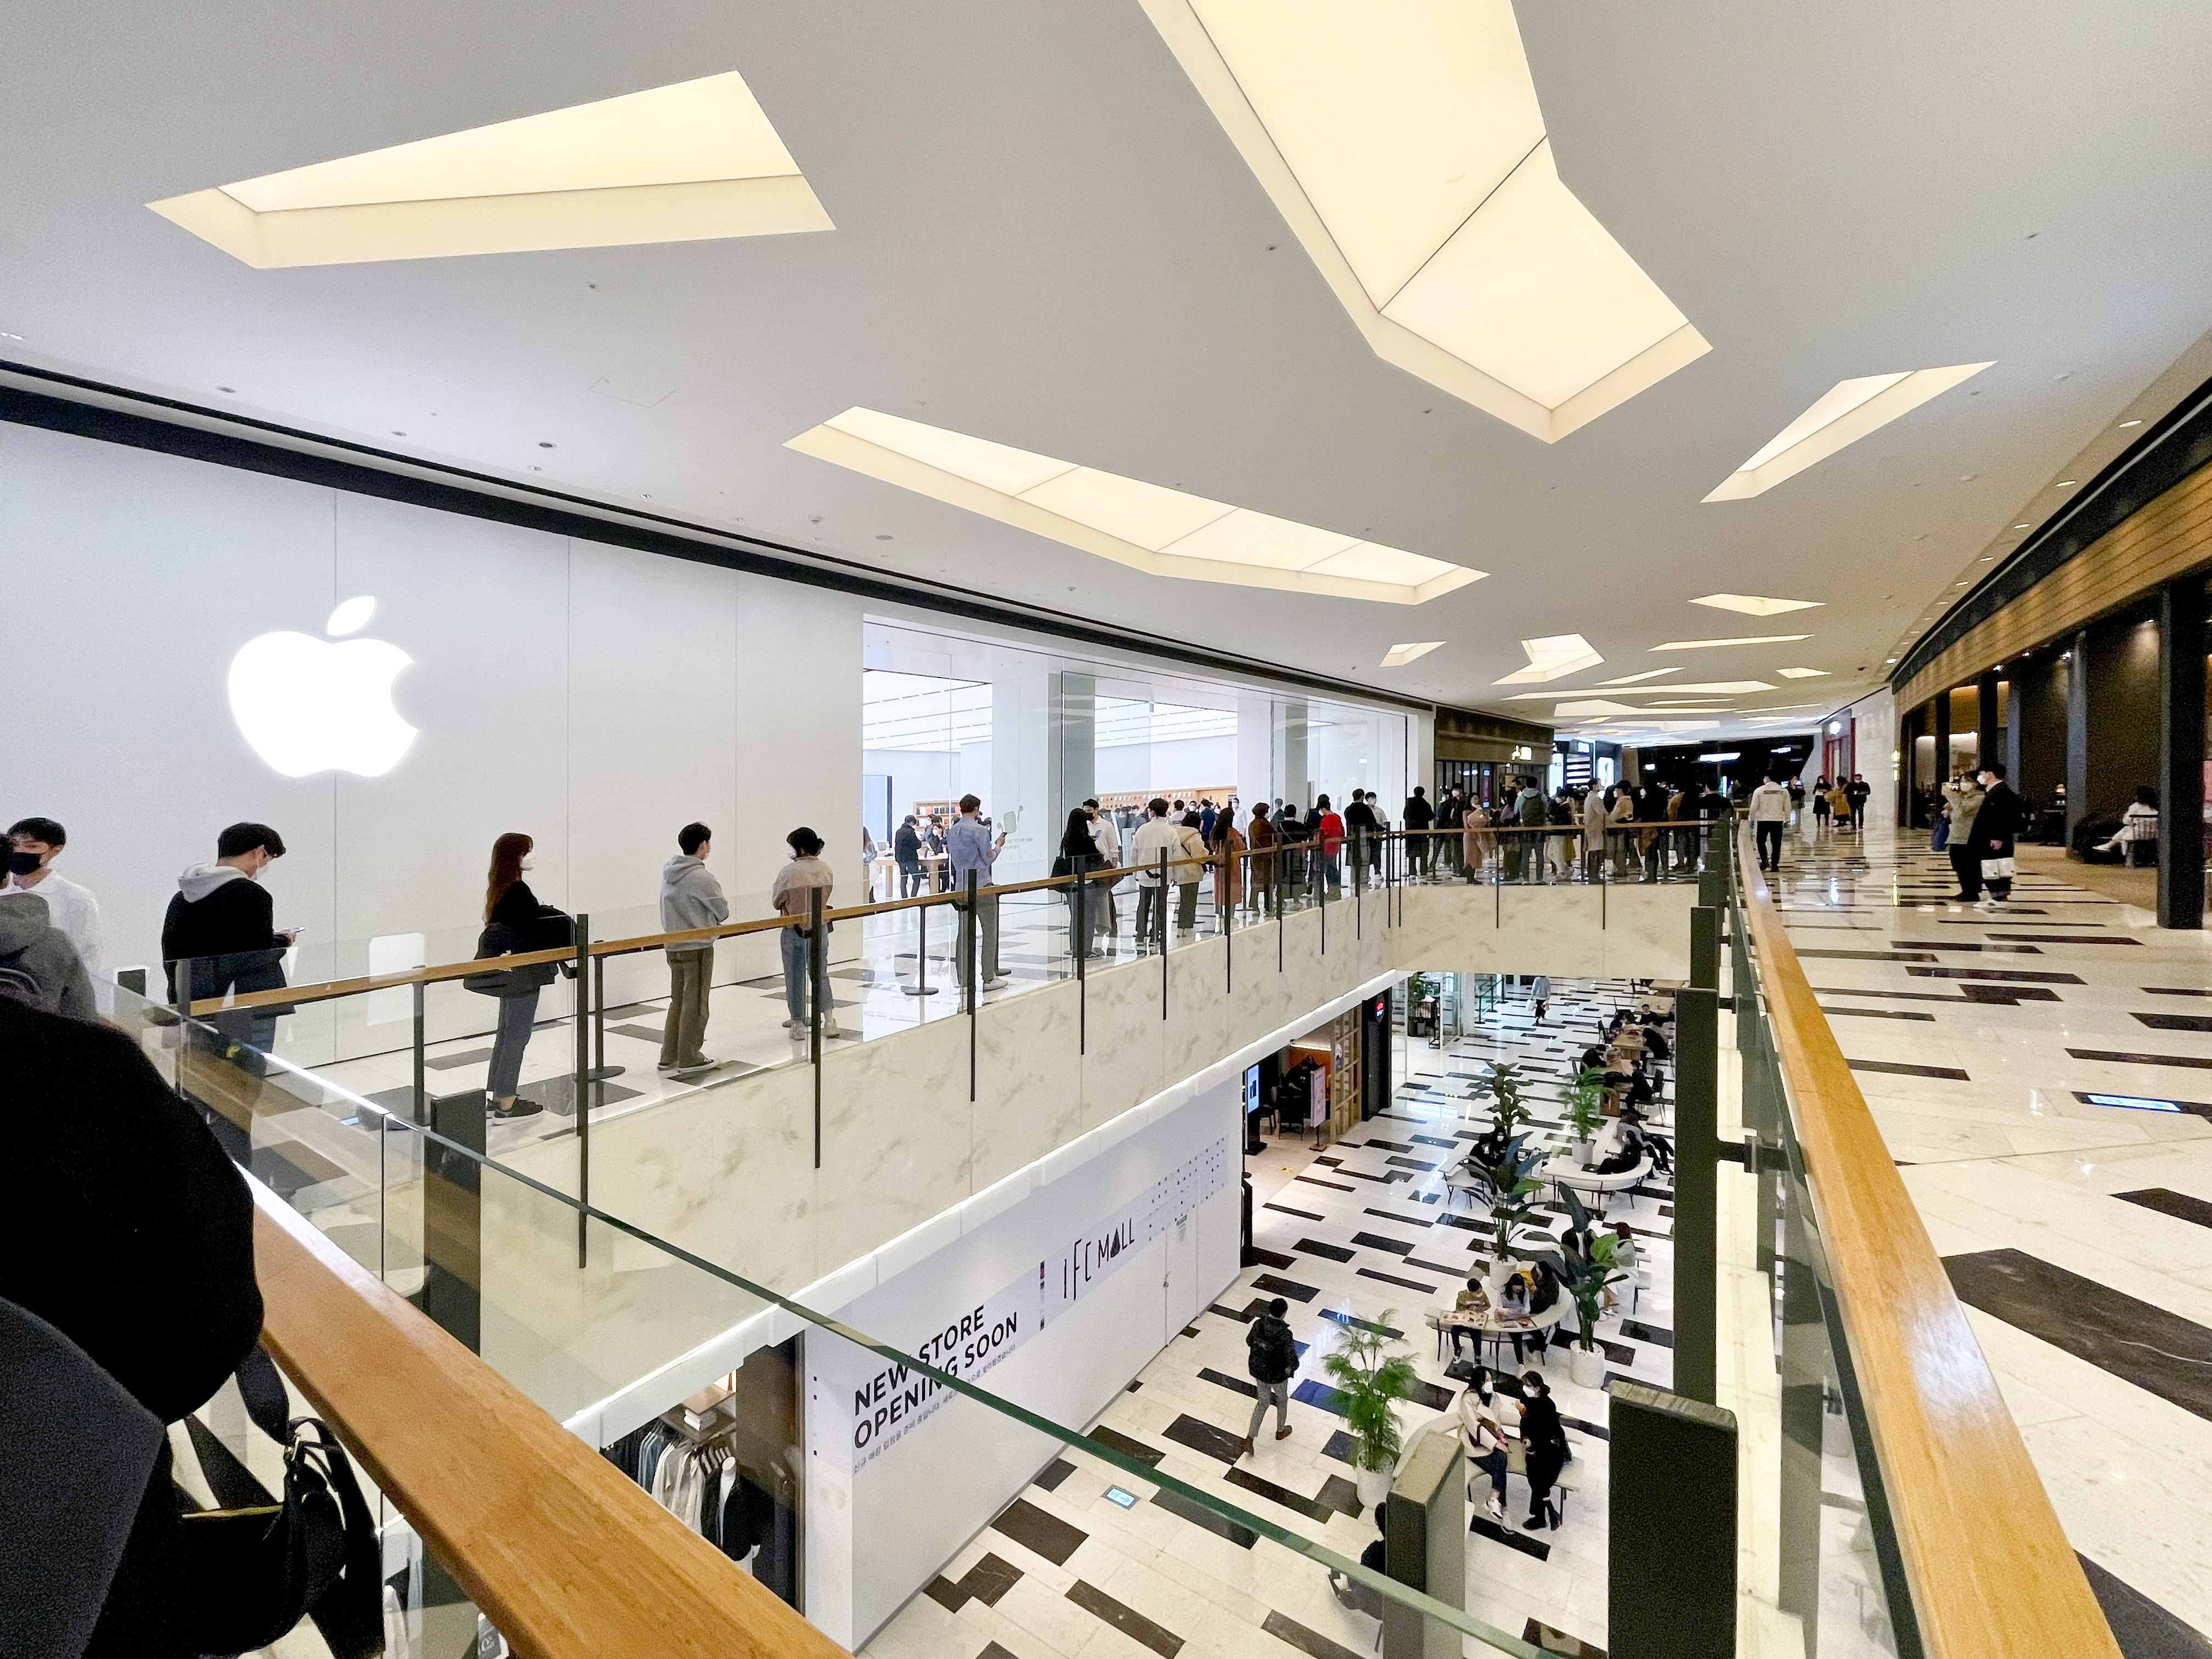 Gallery: Apple Yeouido celebrates grand opening in Seoul - 9to5Mac